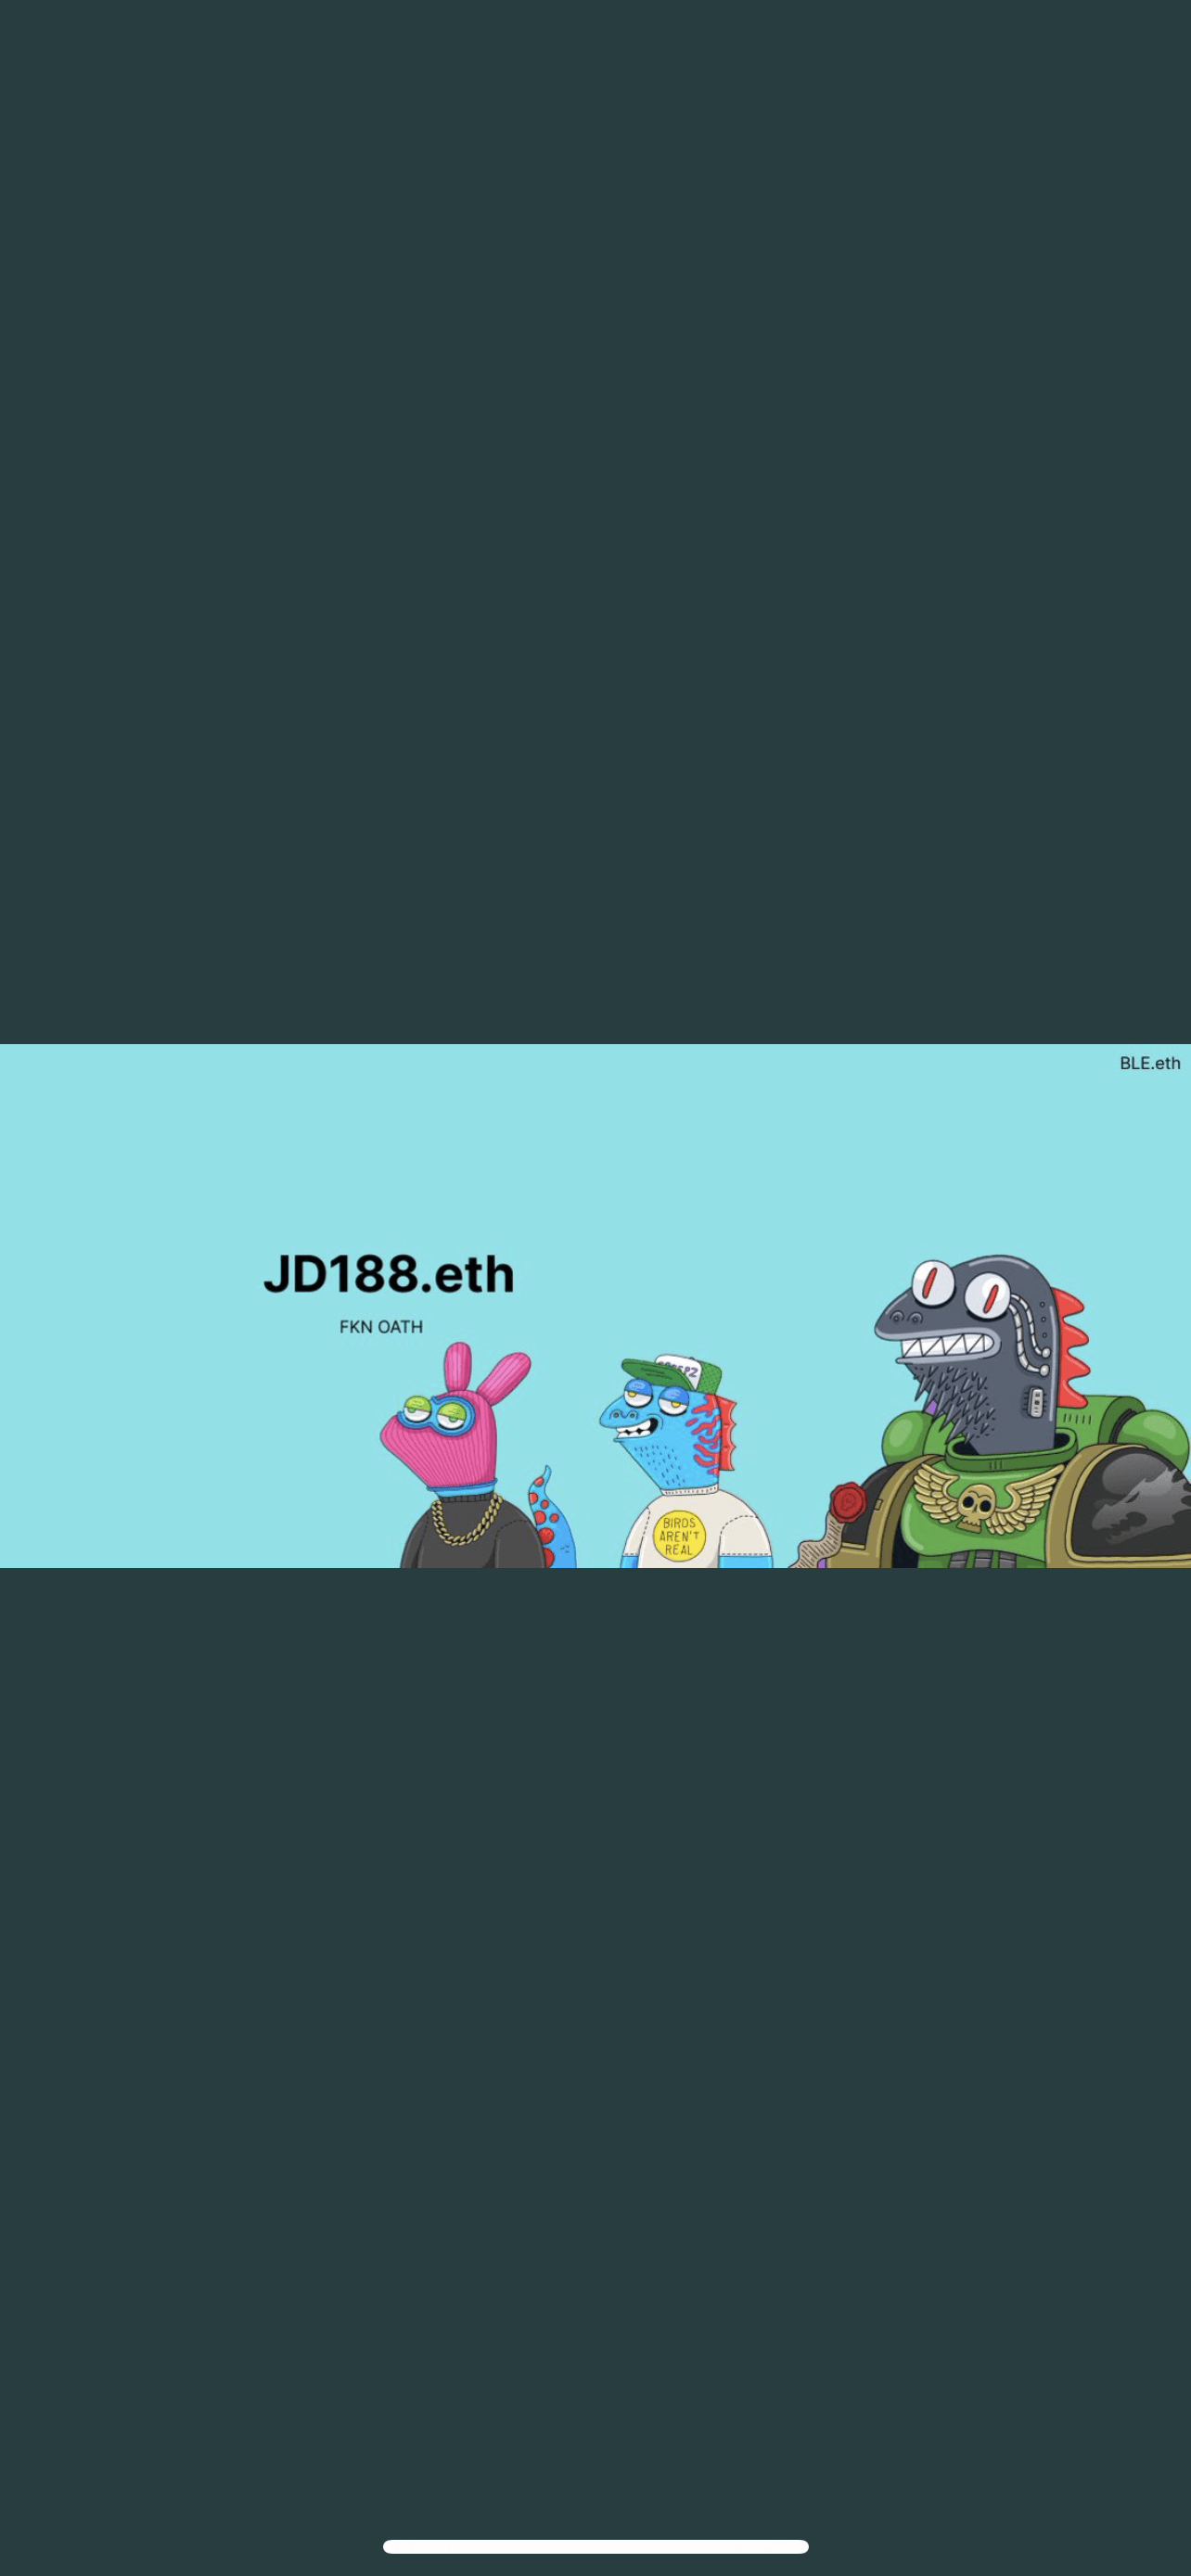 JD188 banner